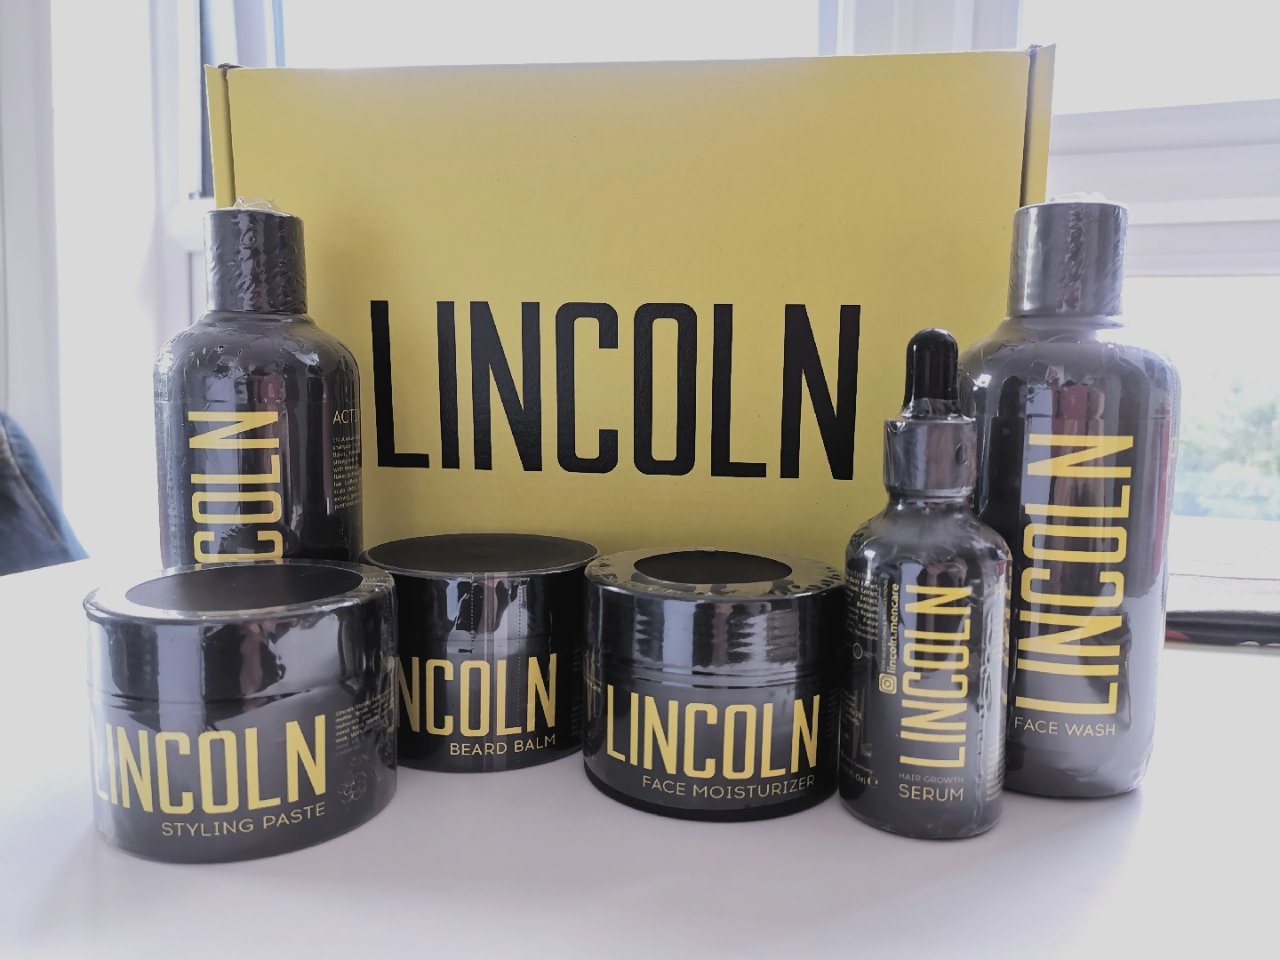 Lincoln Men Care 林肯男士护肤,众测产品